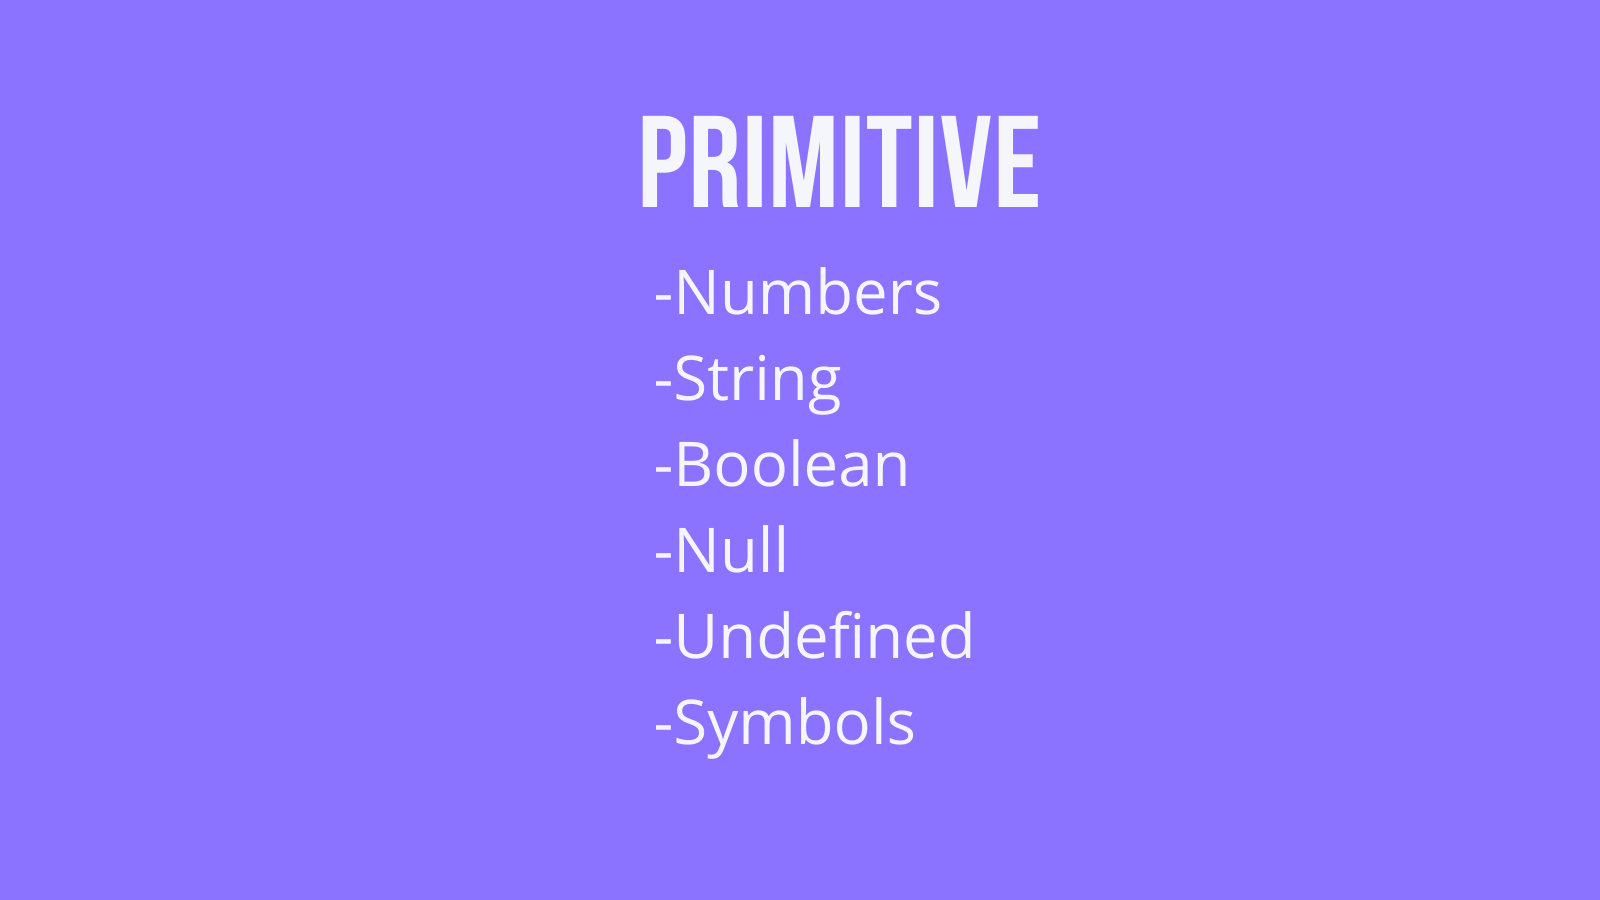 Primitive data types